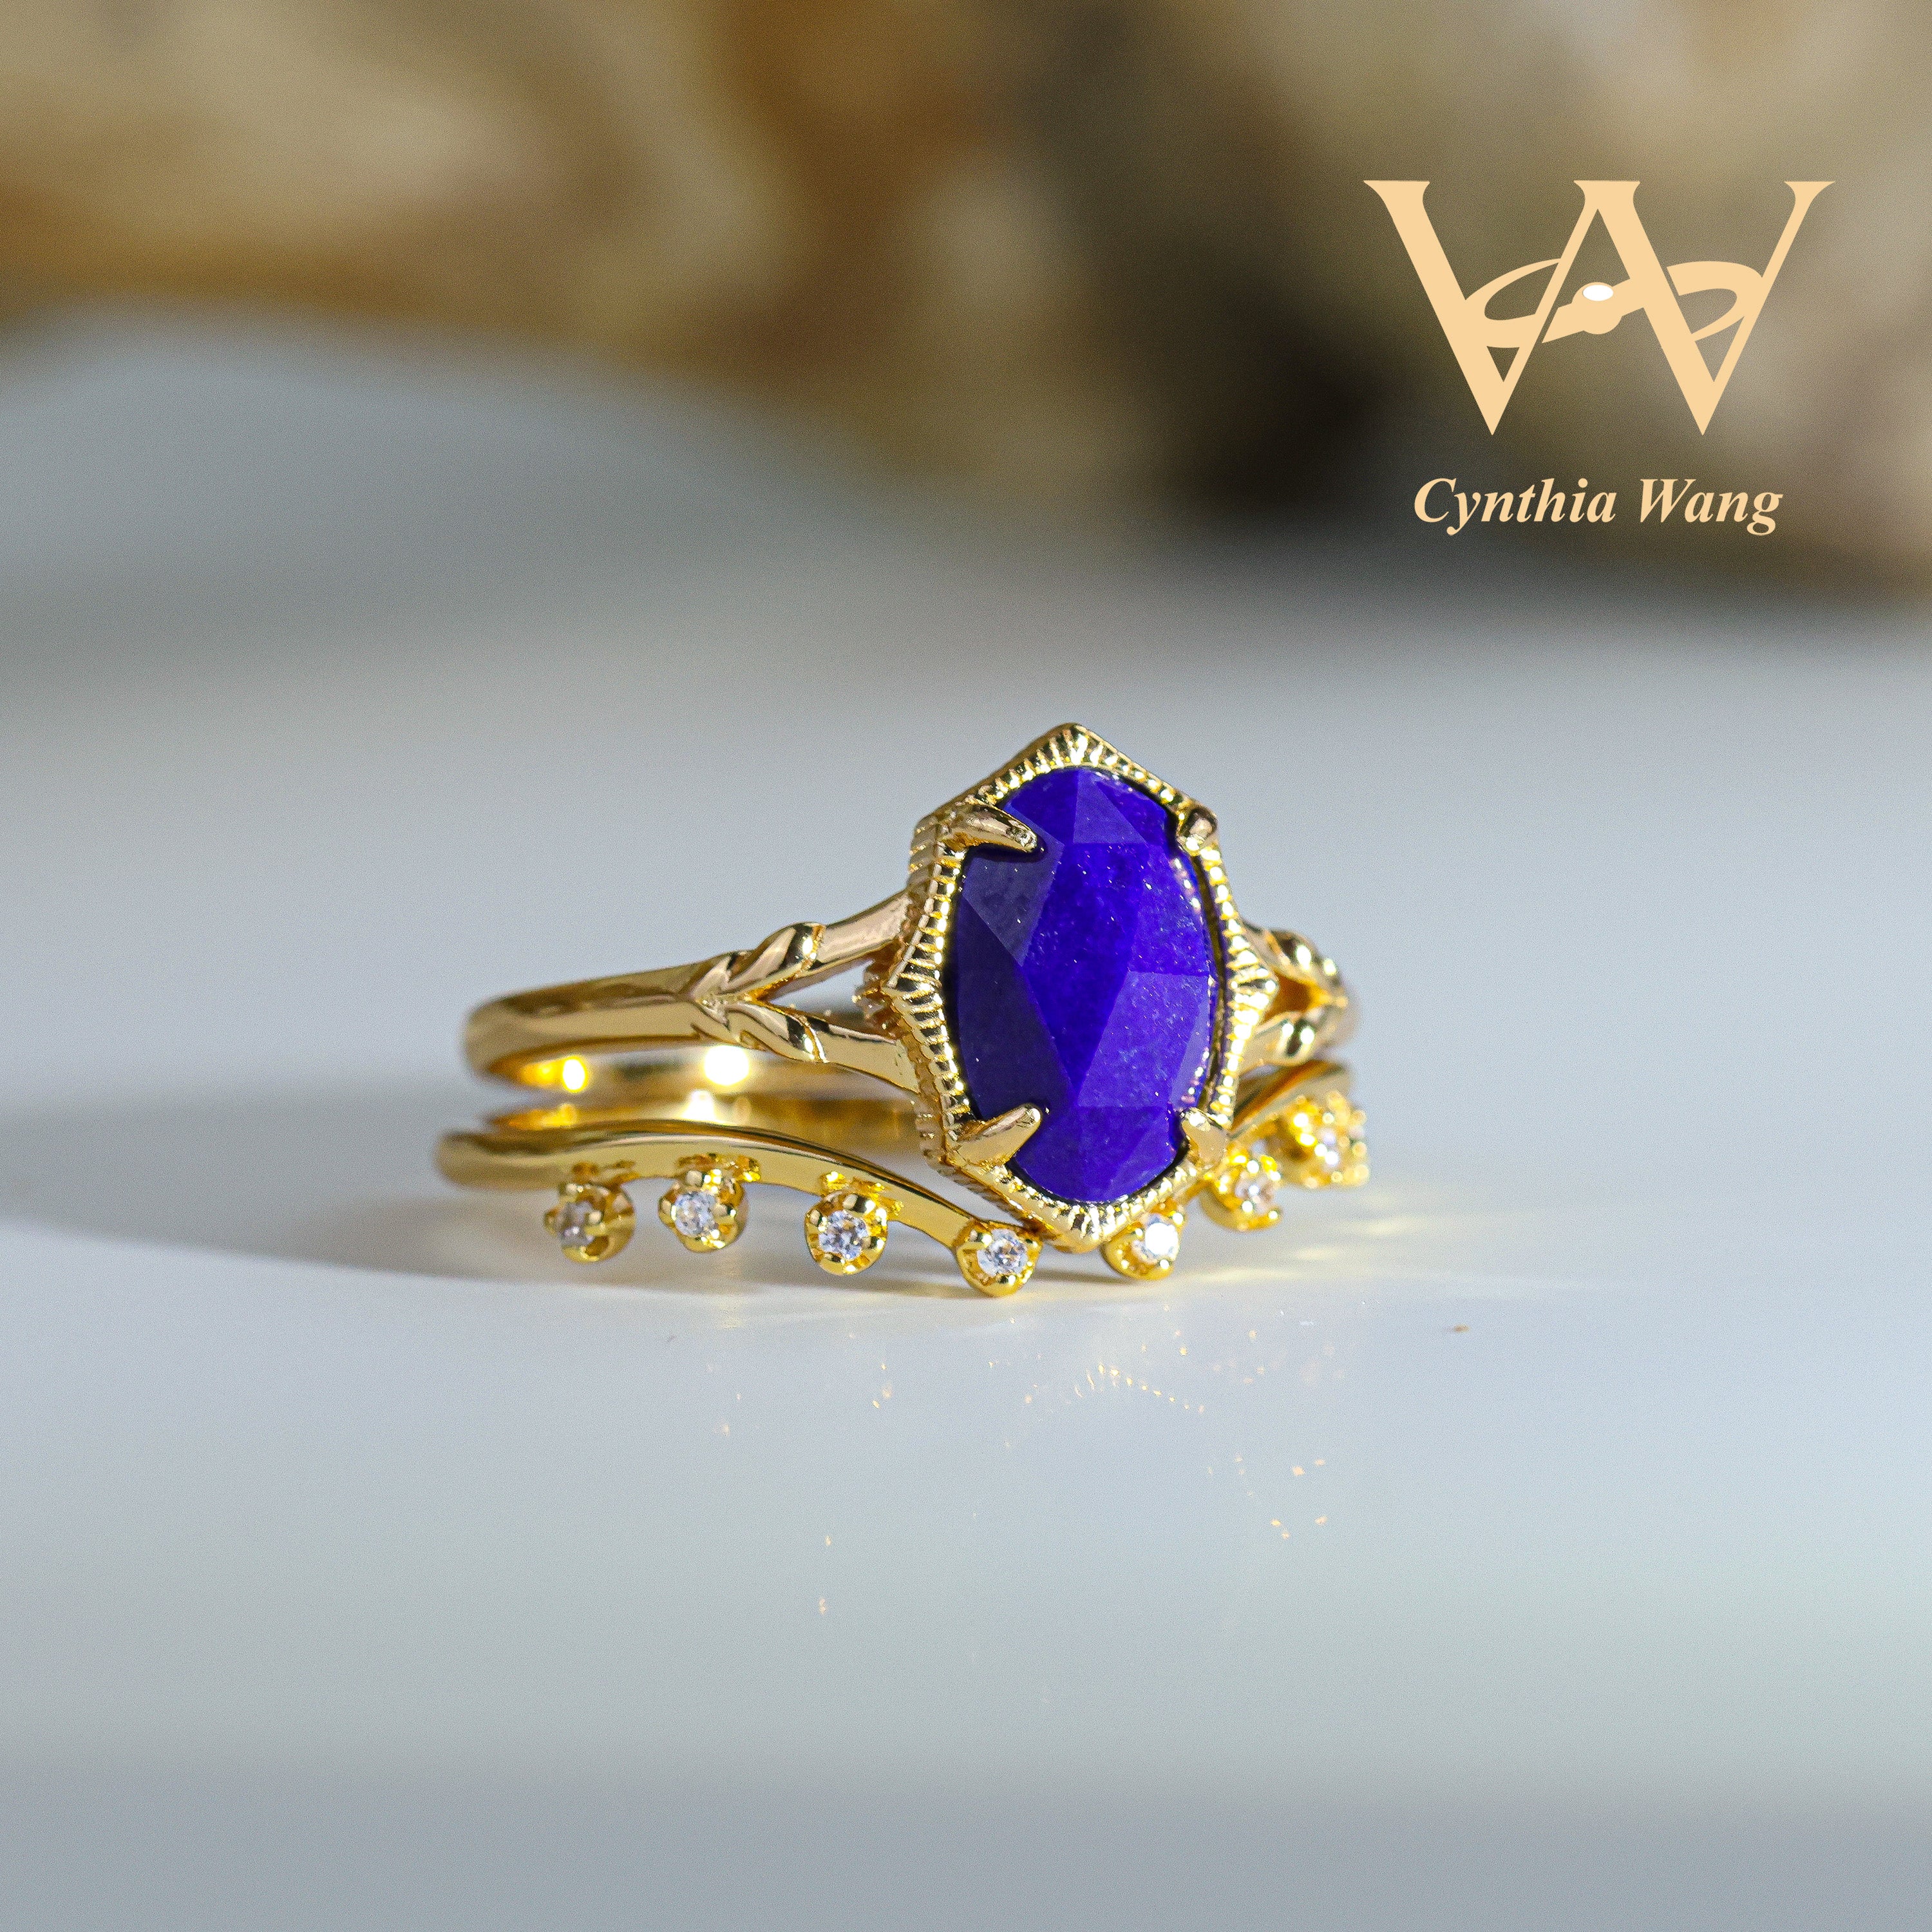 'Radiant Splendor' Lapis Lazuli Ring